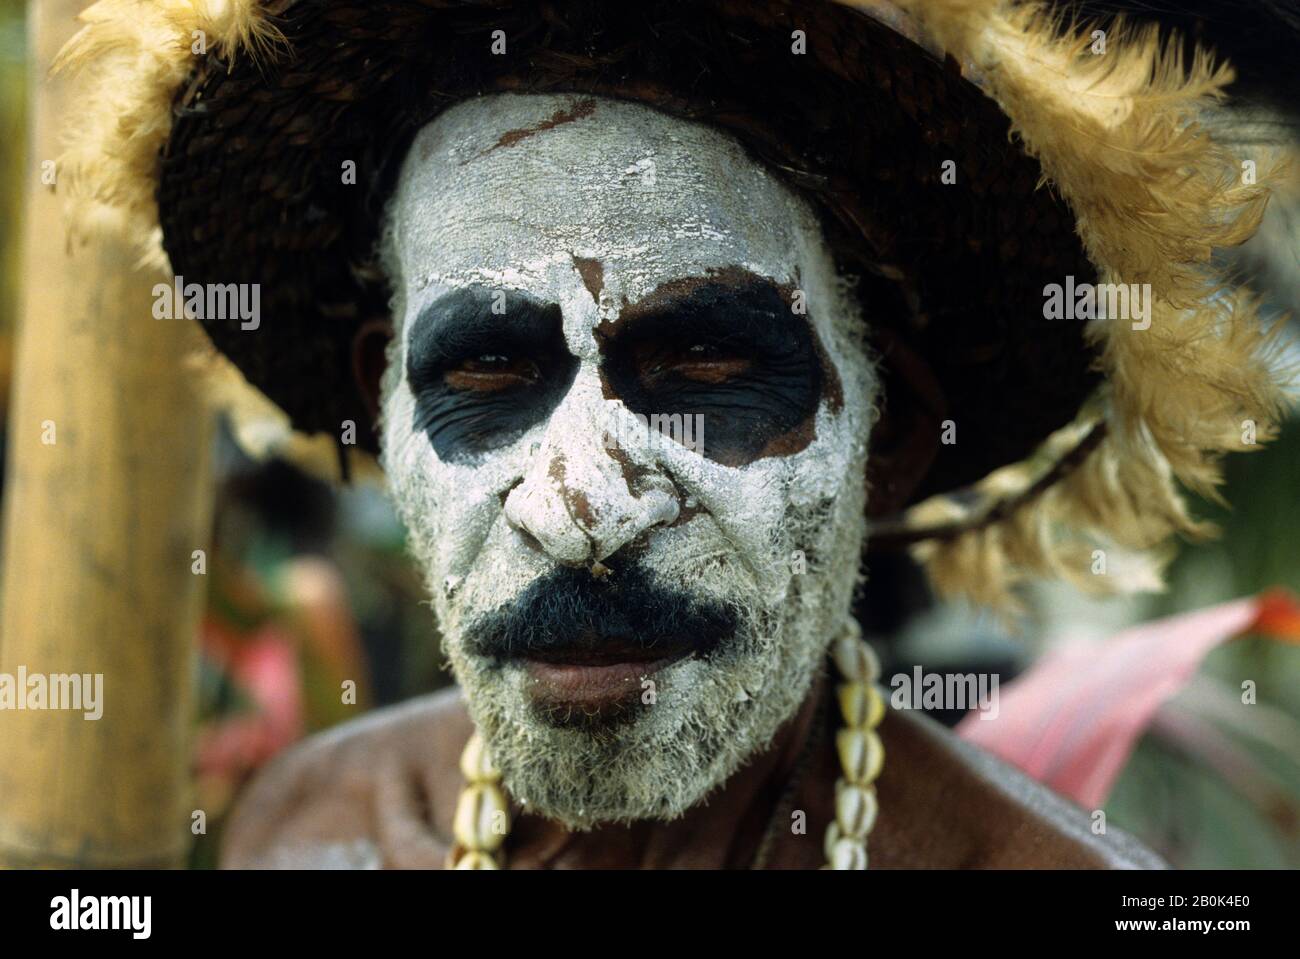 PAPUA NEW GUINEA, SEPIK RIVER, PORTRAIT OF TRADITIONAL SING-SING DANCER Stock Photo